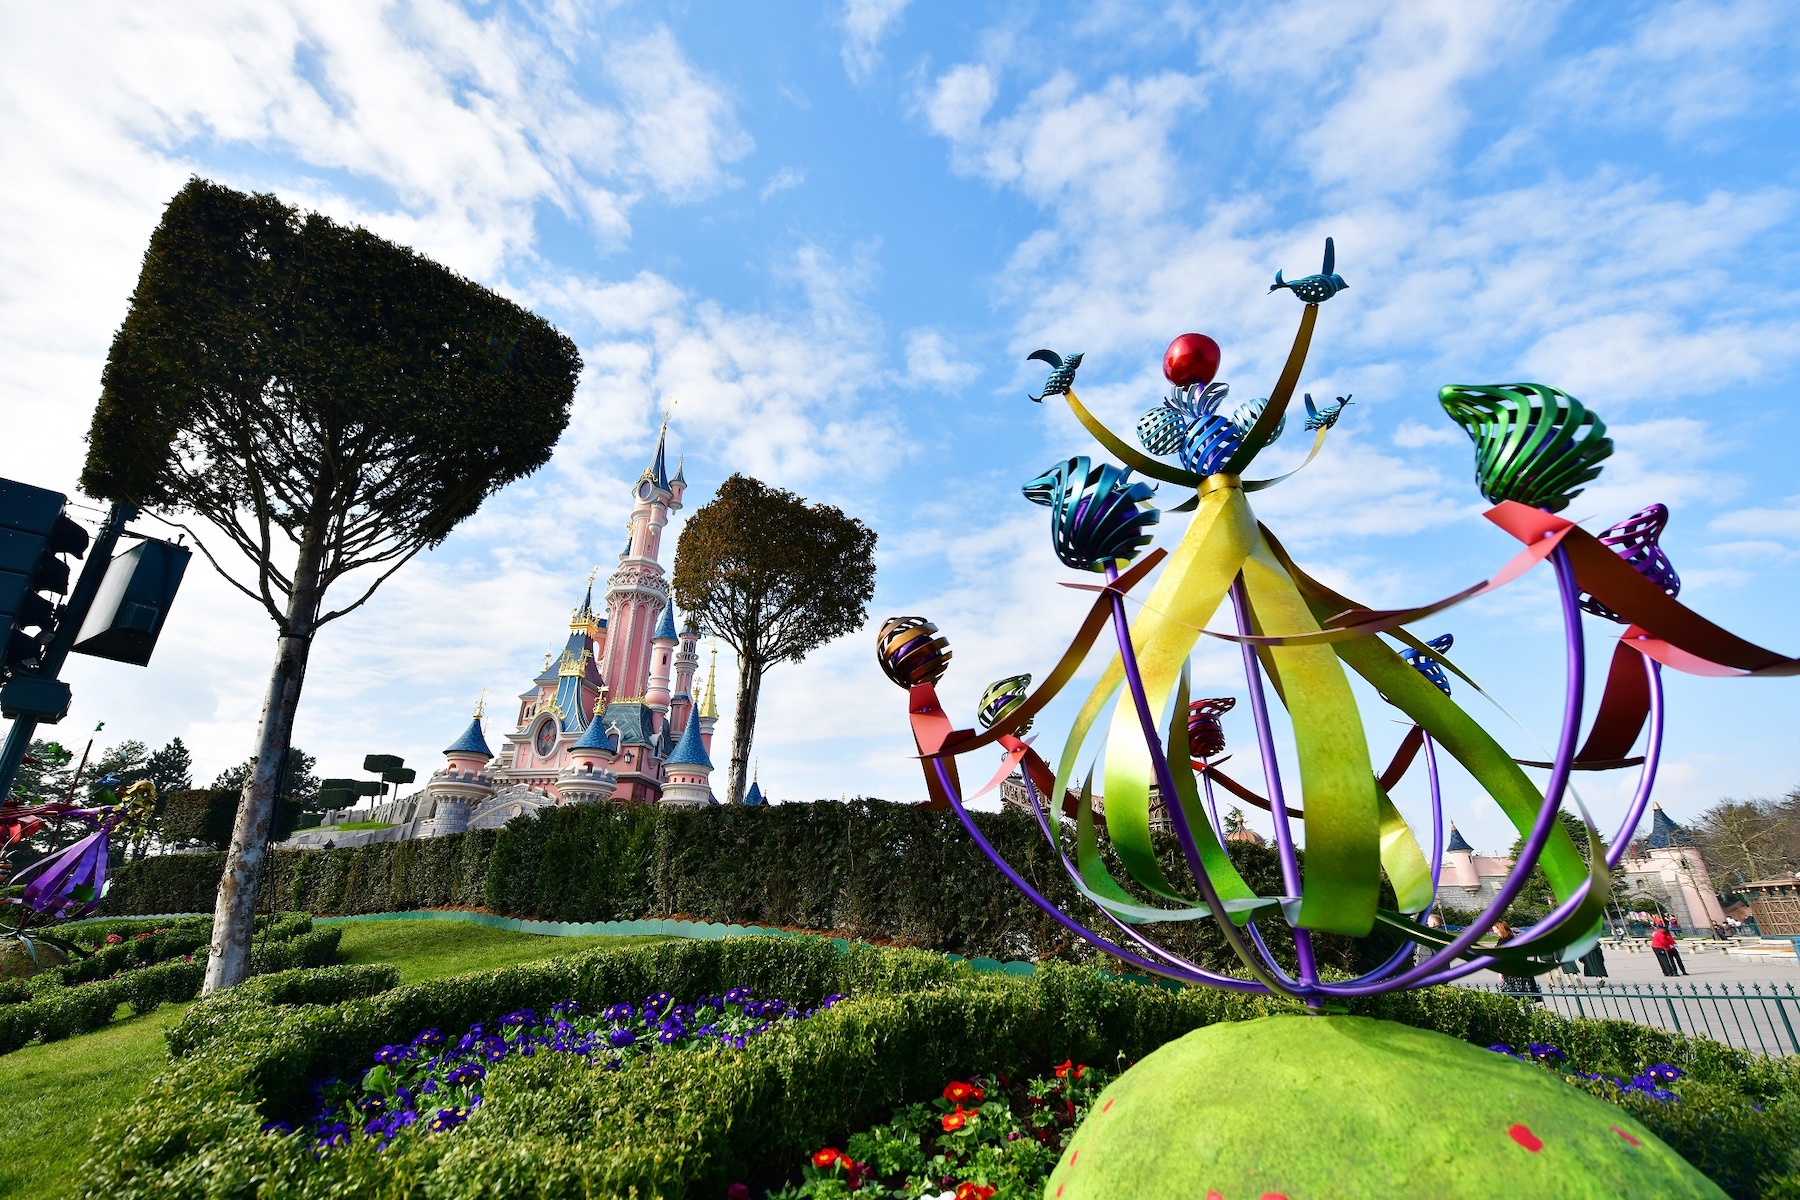 Disneyland Paris Recognized with IAAPA Brass Ring Awards